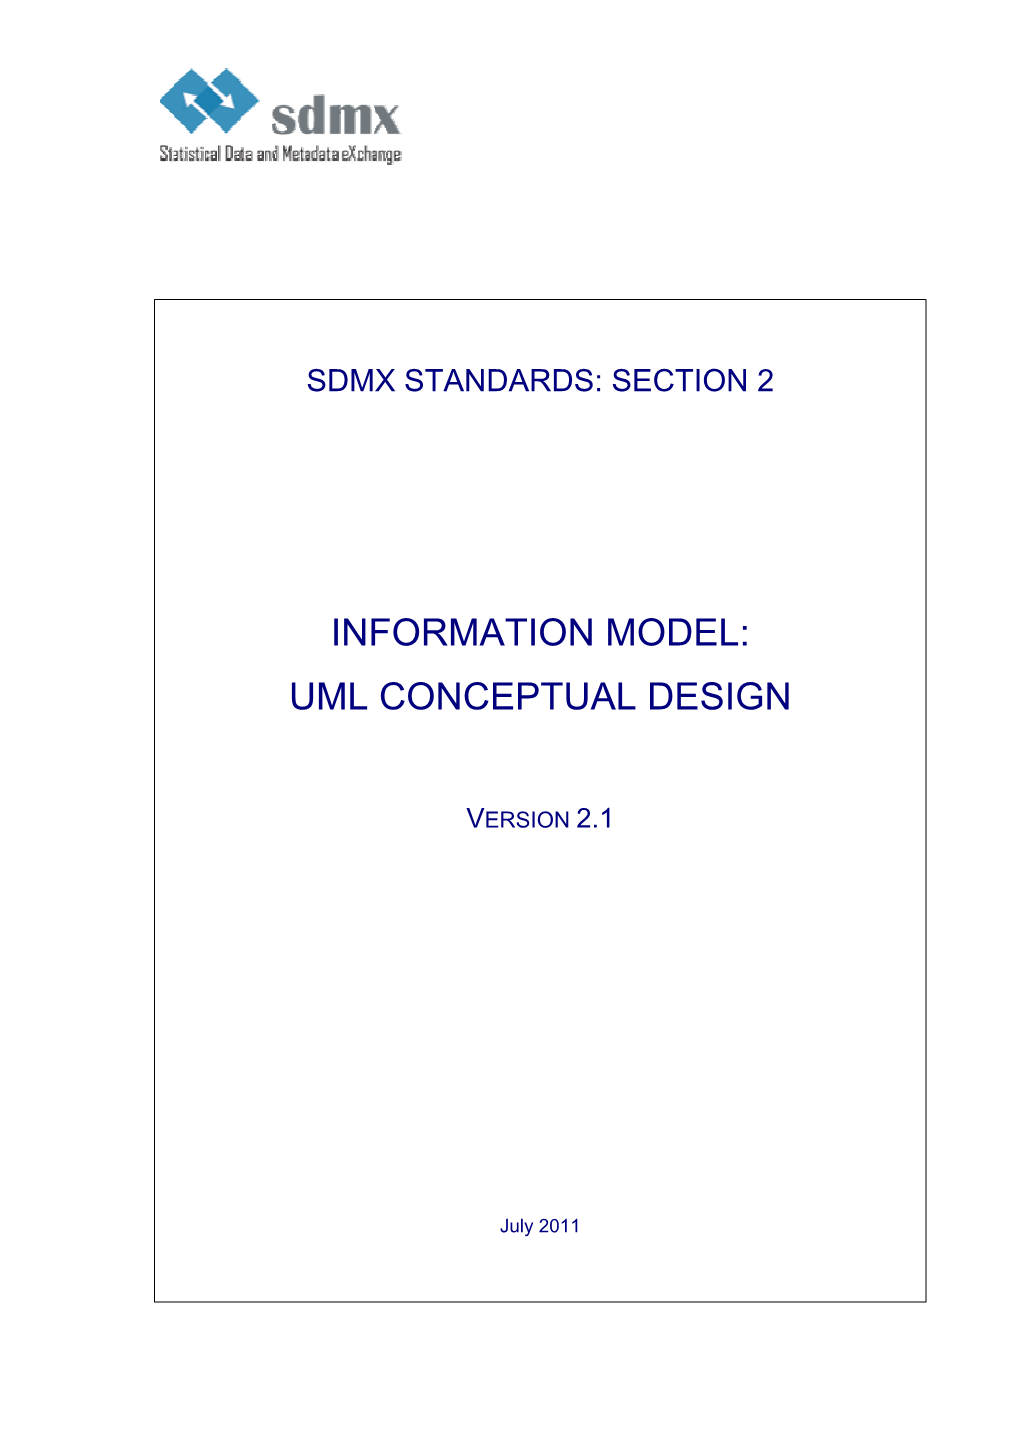 Information Model: Uml Conceptual Design